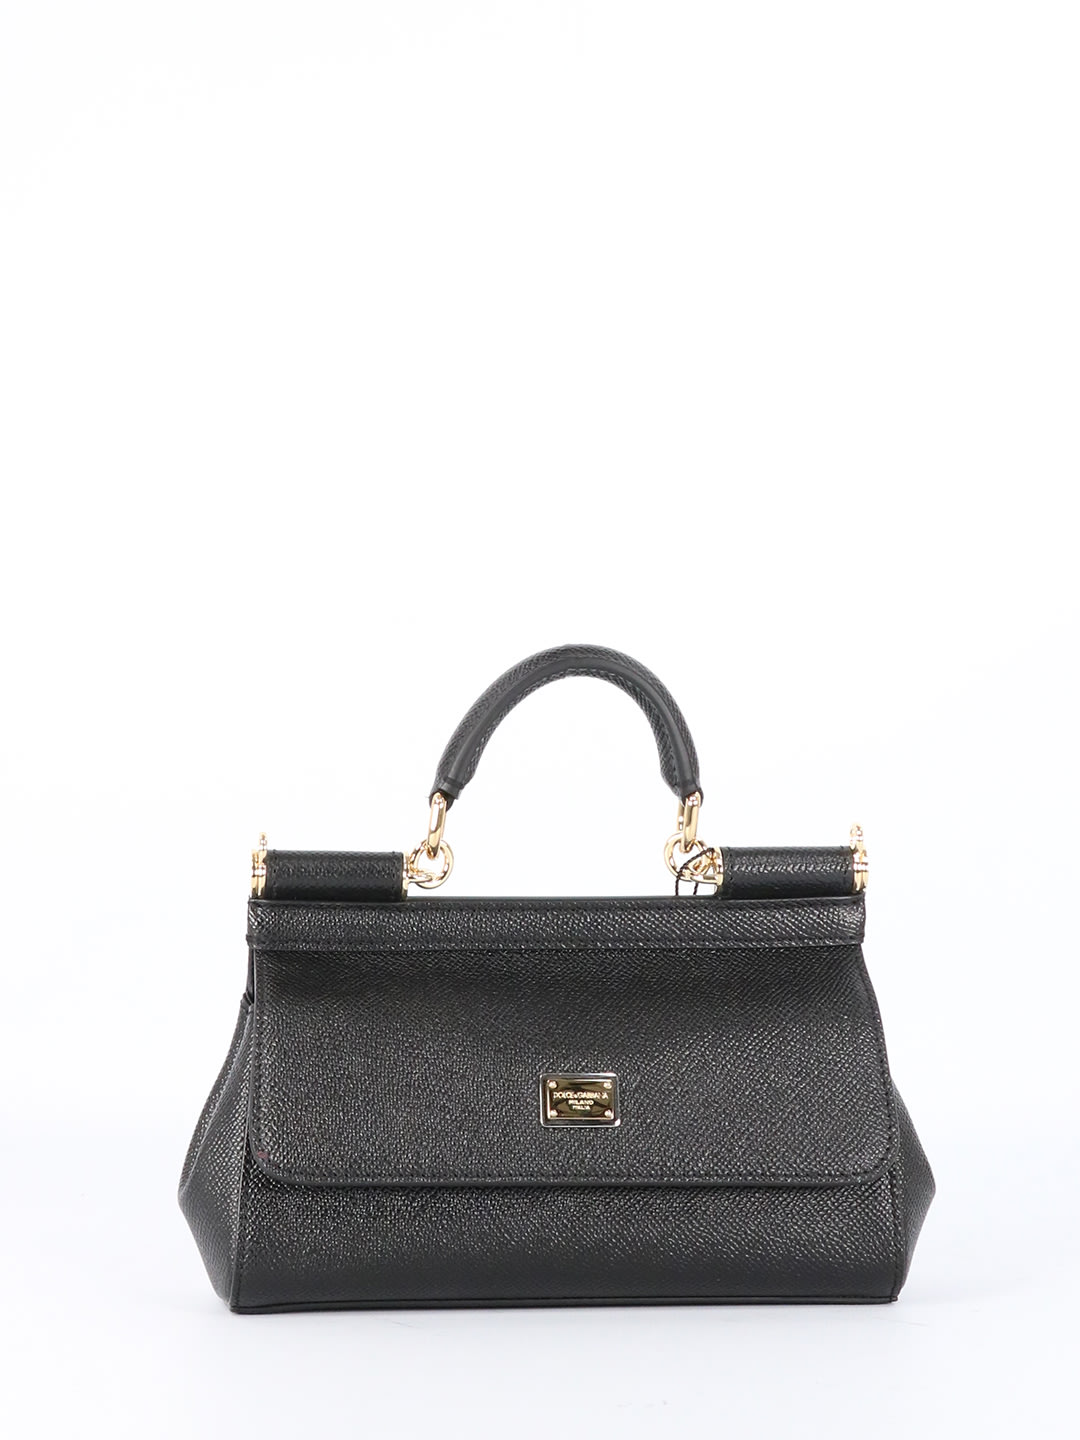 Dolce & Gabbana Black Small Sicily Bag